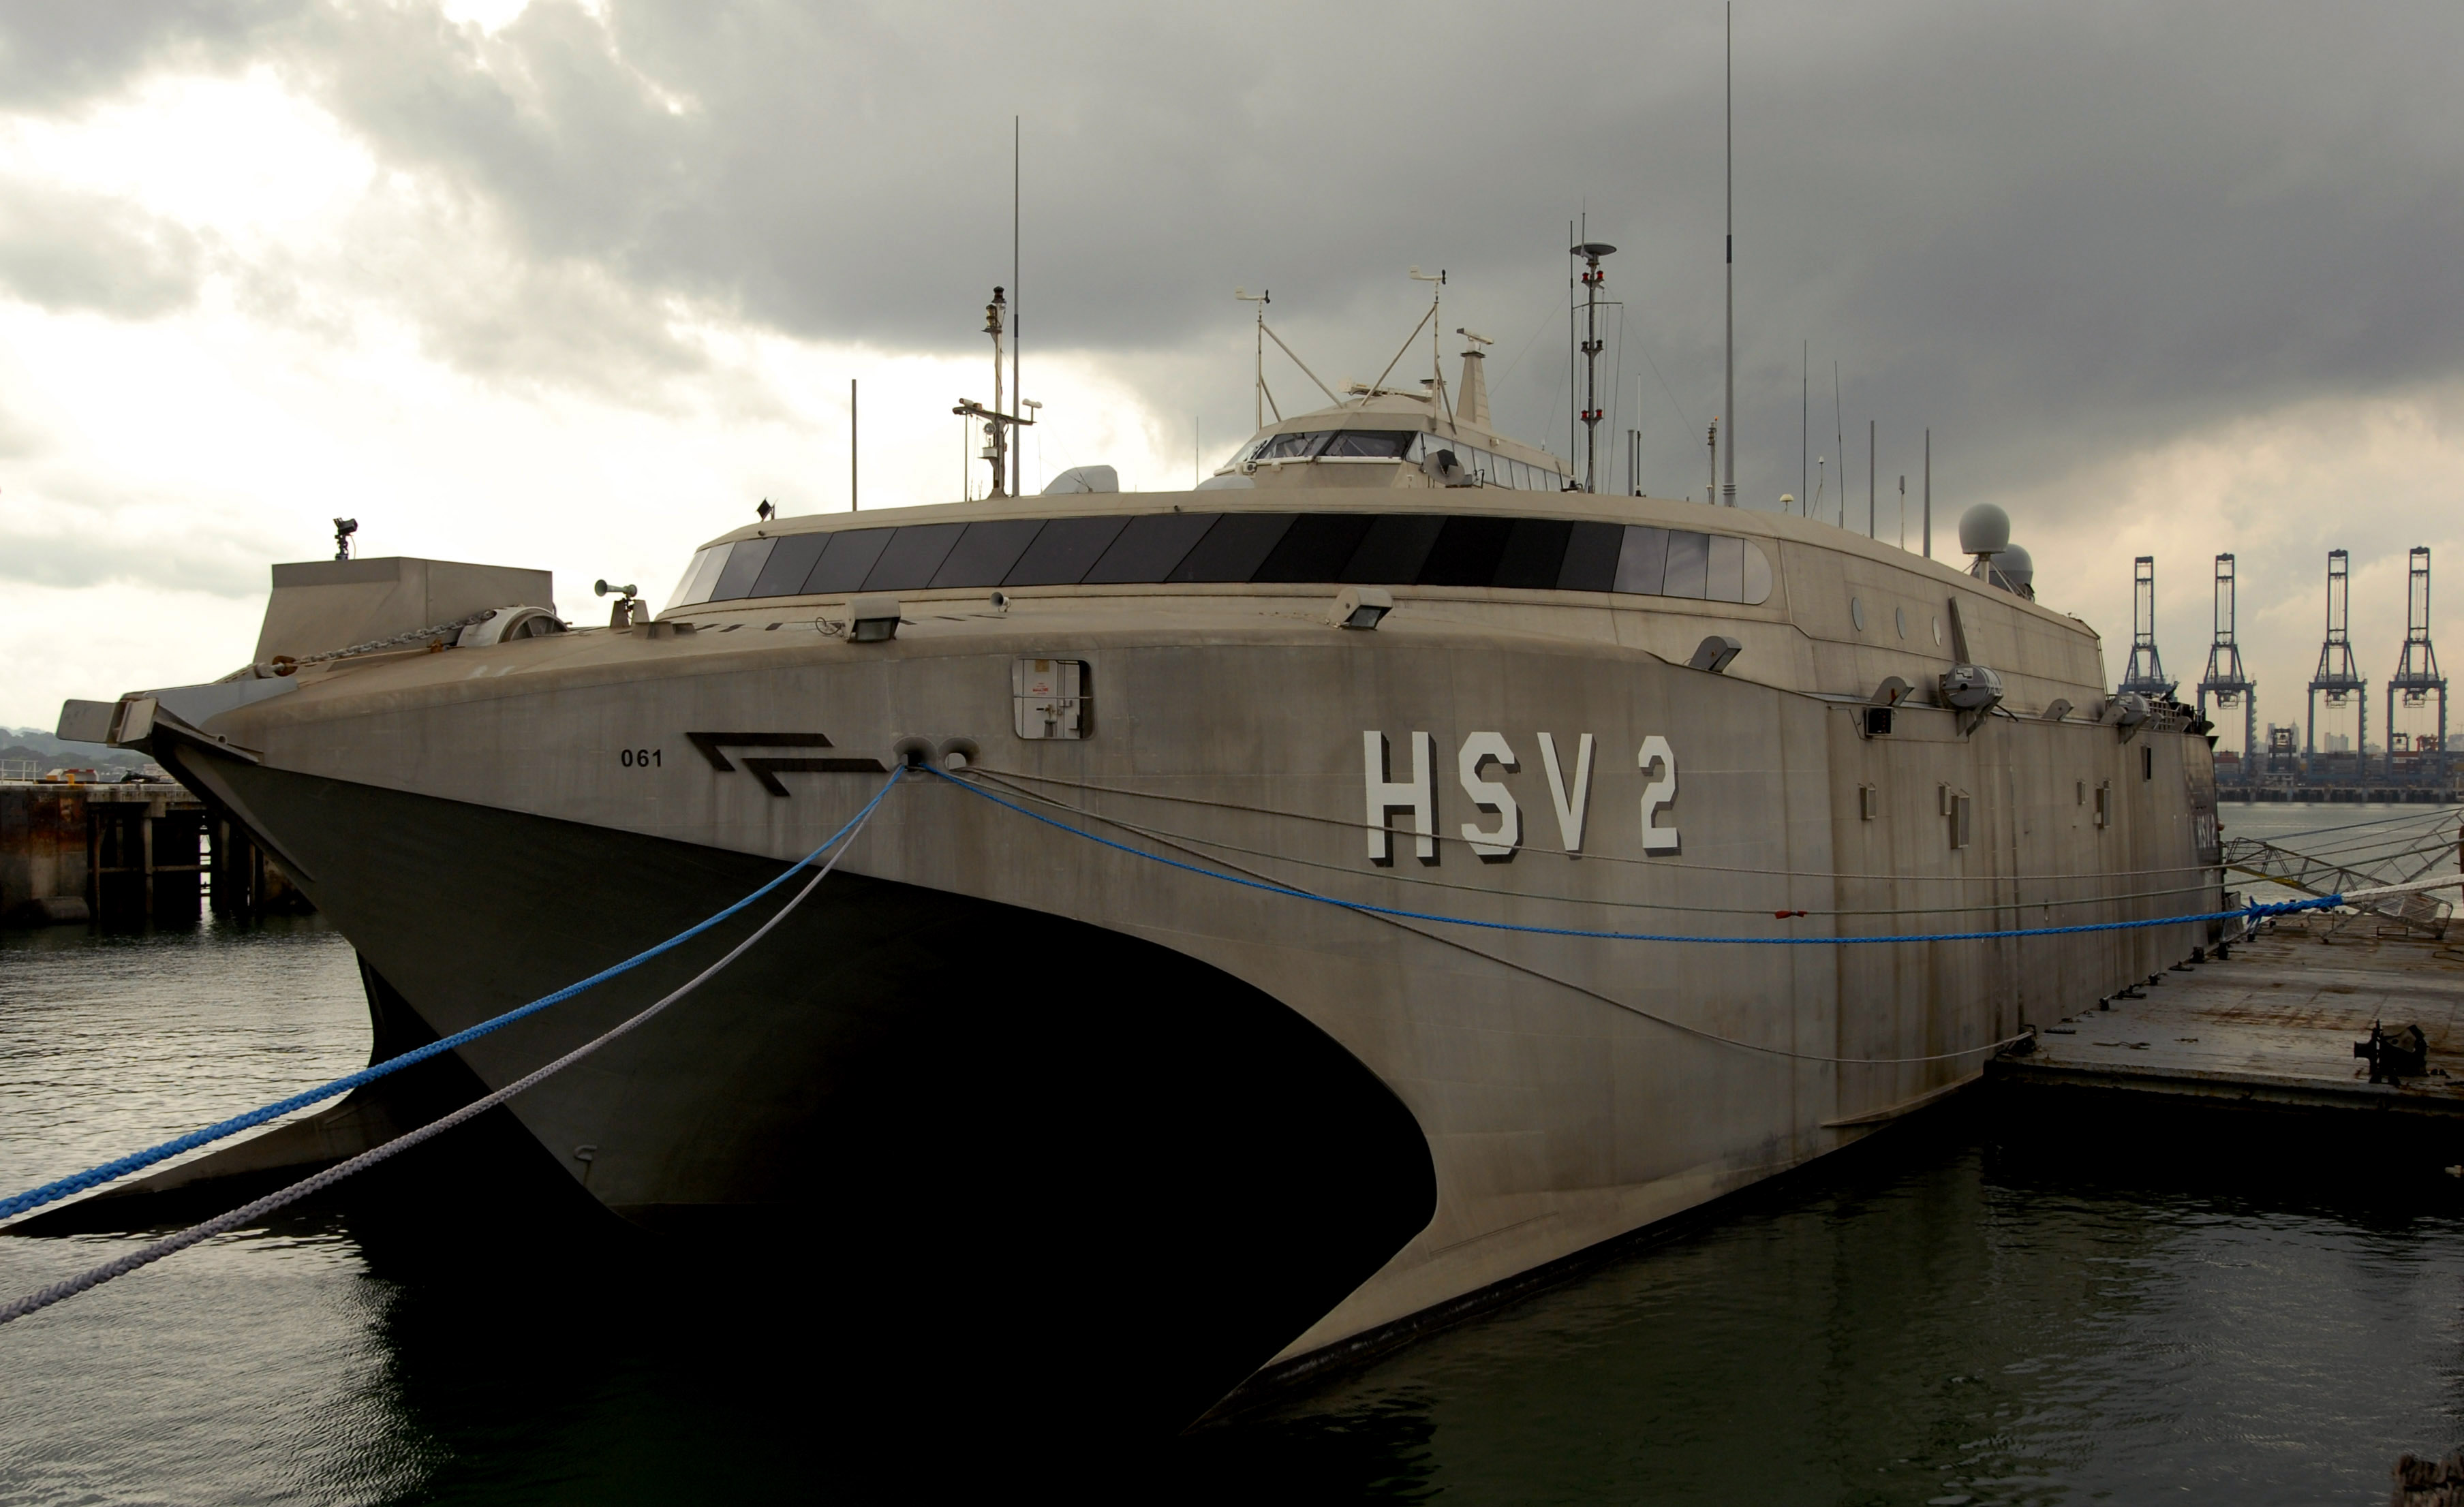 US Navy 100601-N-4971L-089 Swift (HSV 2) is moored in Balboa-Rodman, Panama